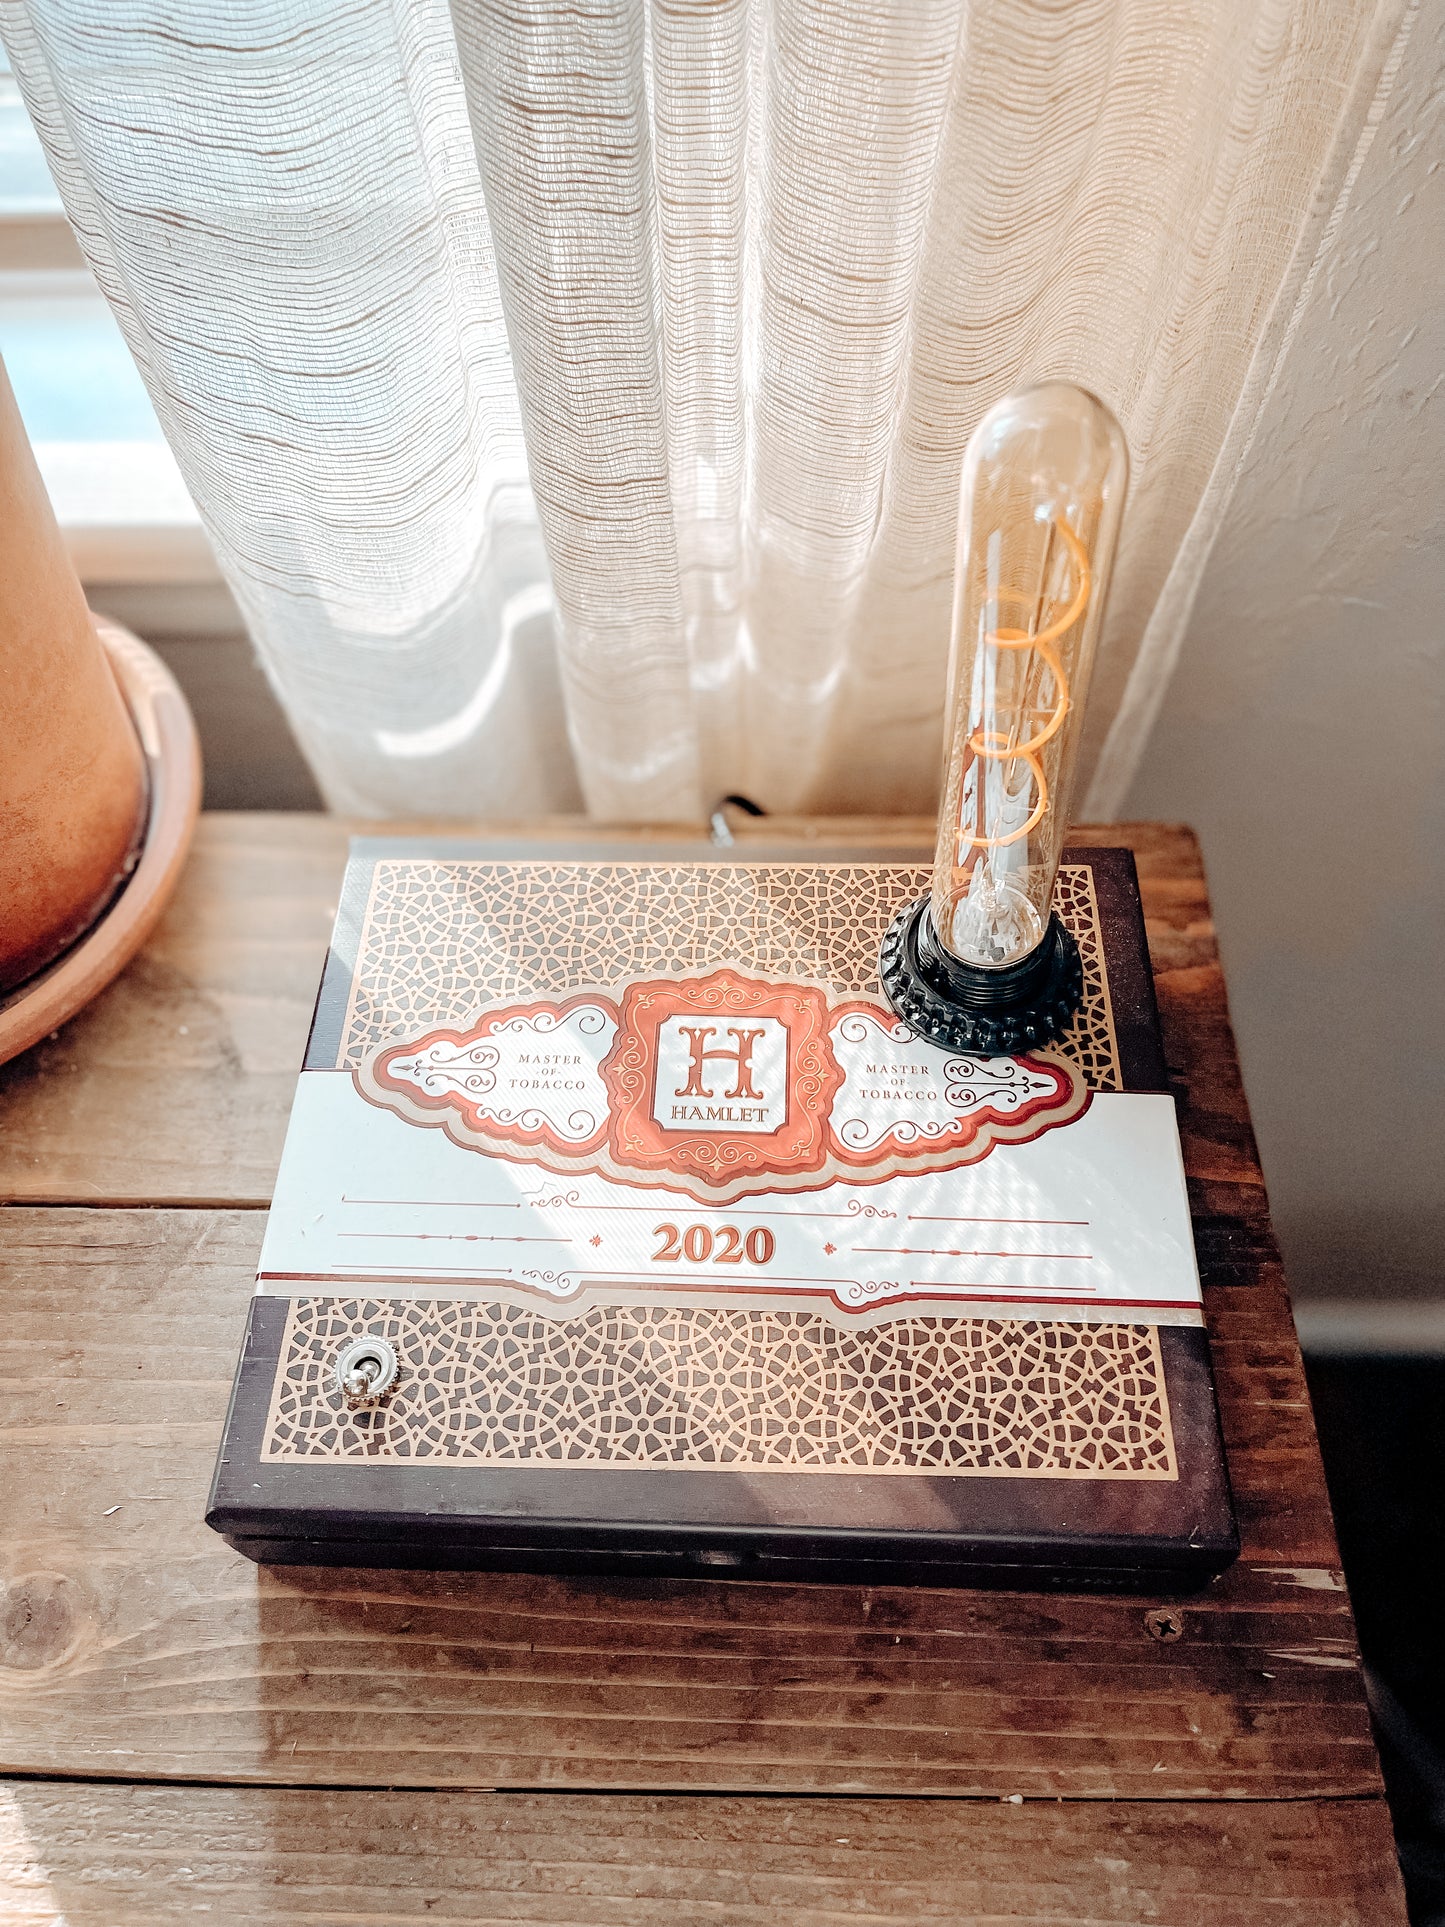 Cigar Box Lamp - RP Hamlet 2020